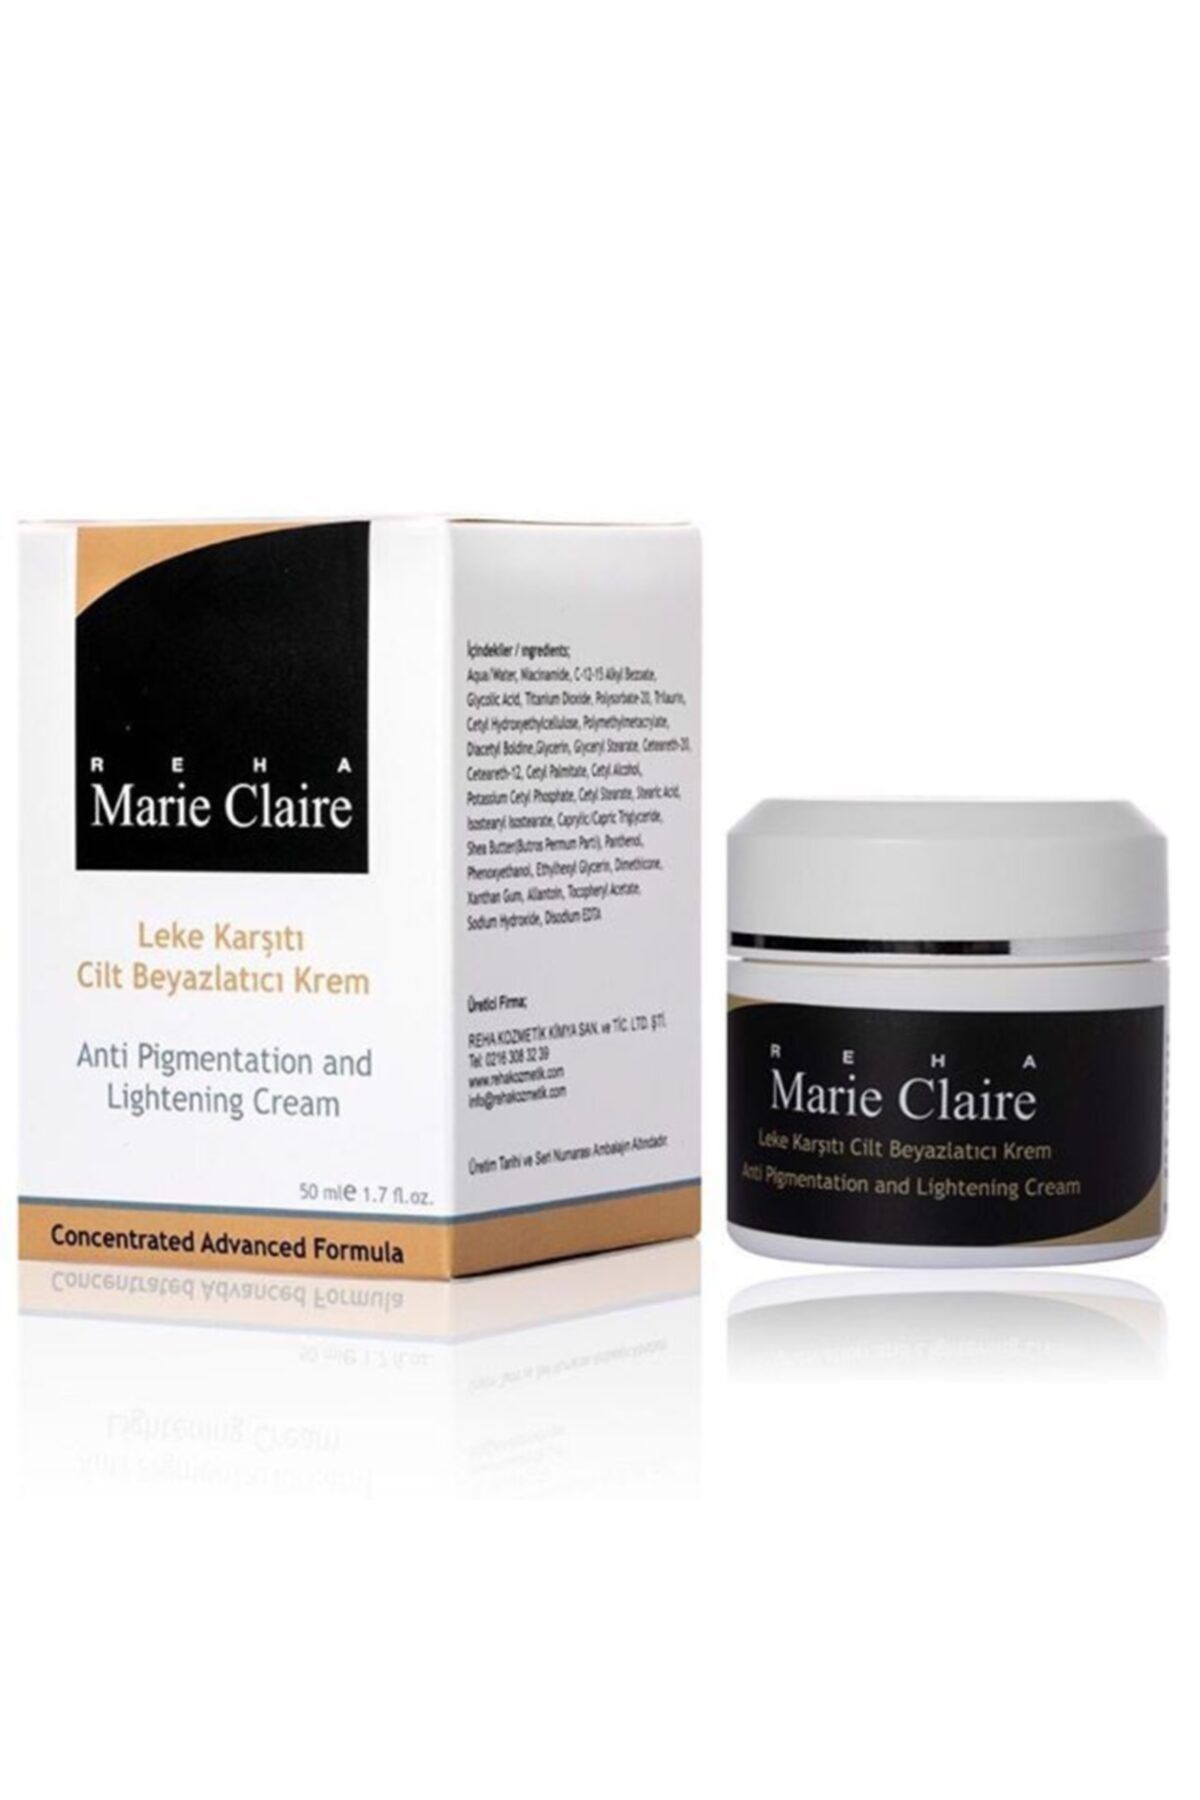 Marie Claire Reha Leke Karşıtı Cilt Beyazlatıcı Krem Anti Pigmentation And Lightening Cream